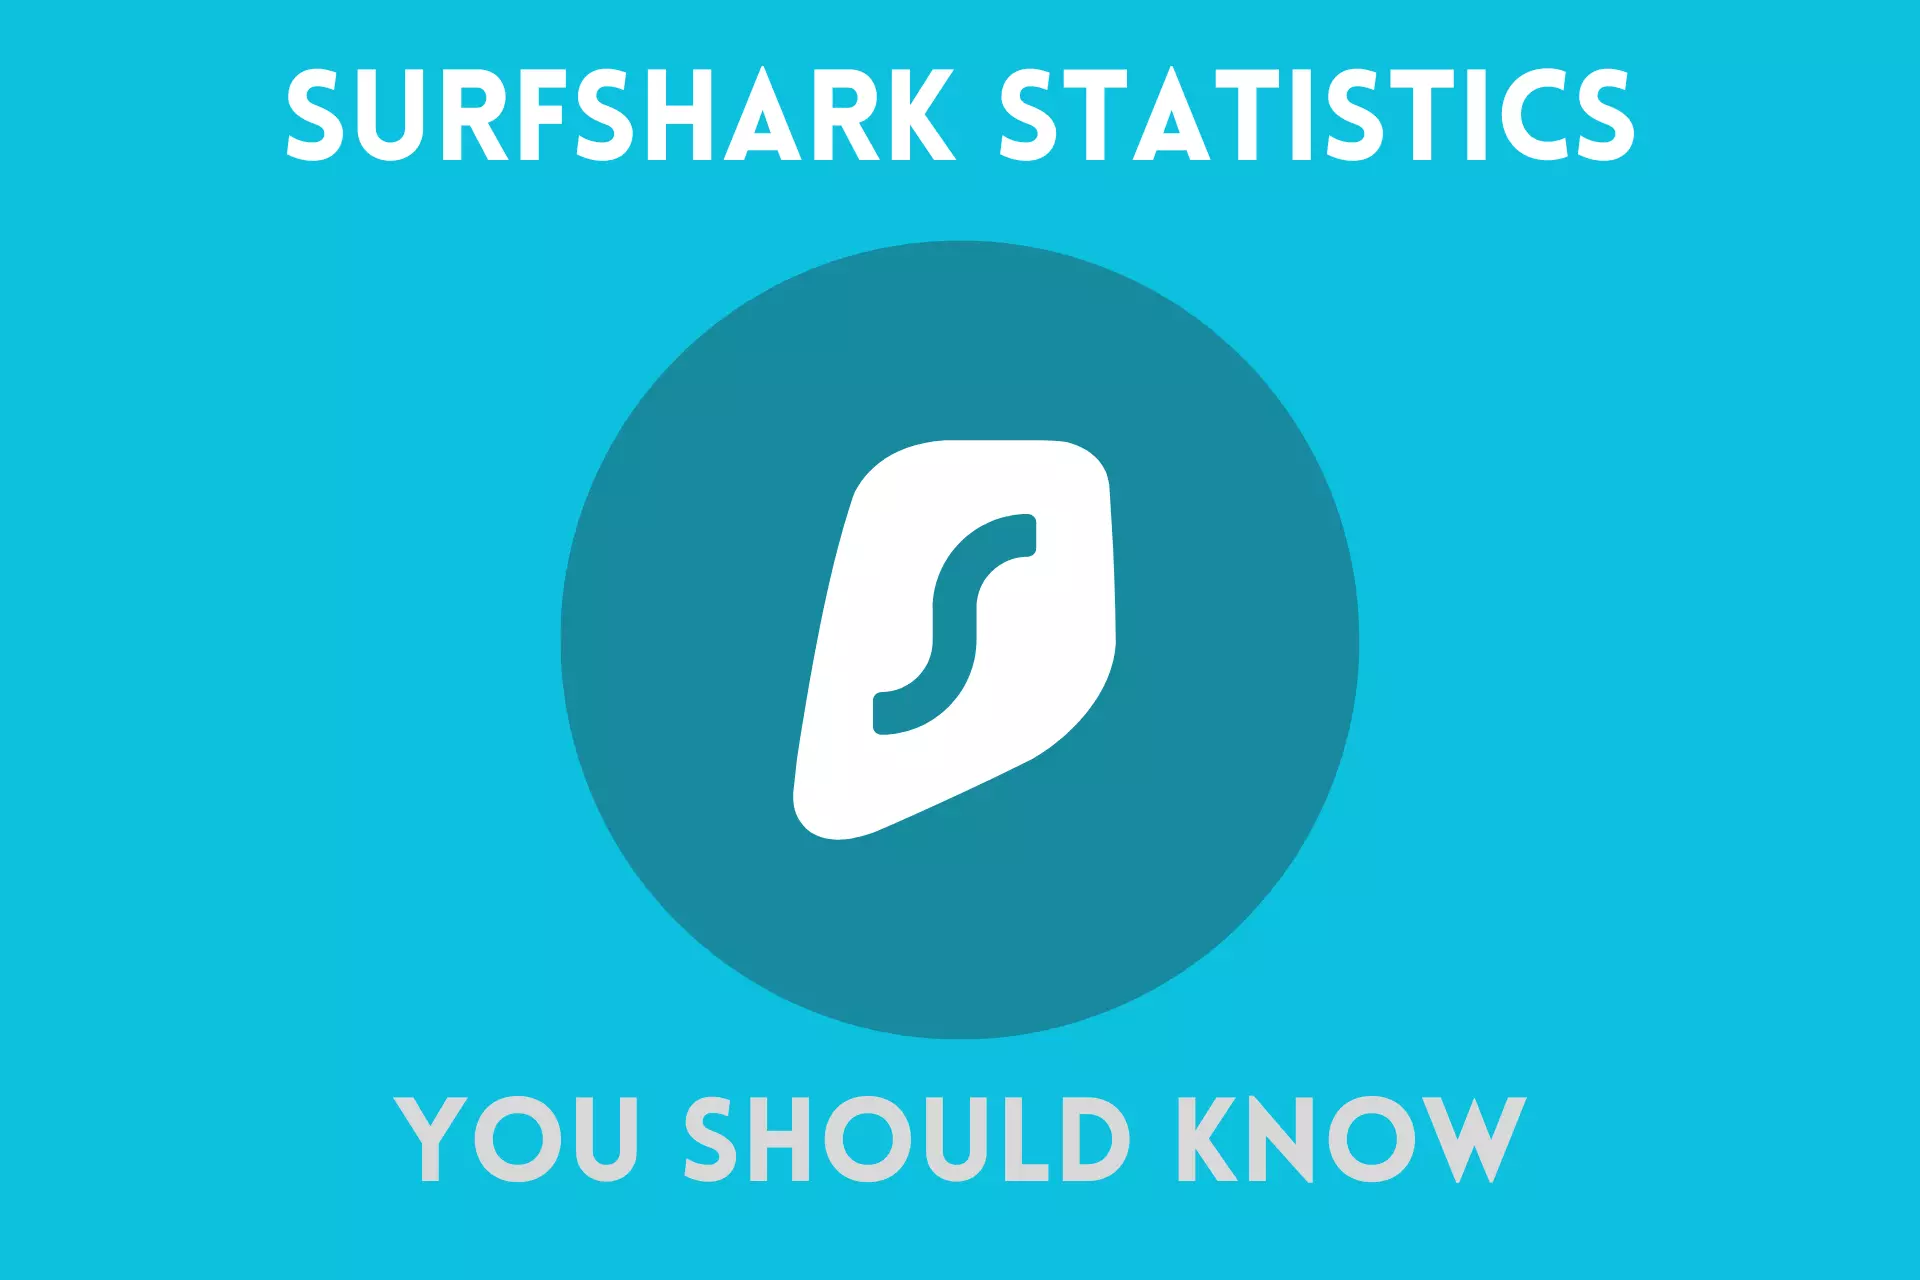 SURFSHARK STATISTICS